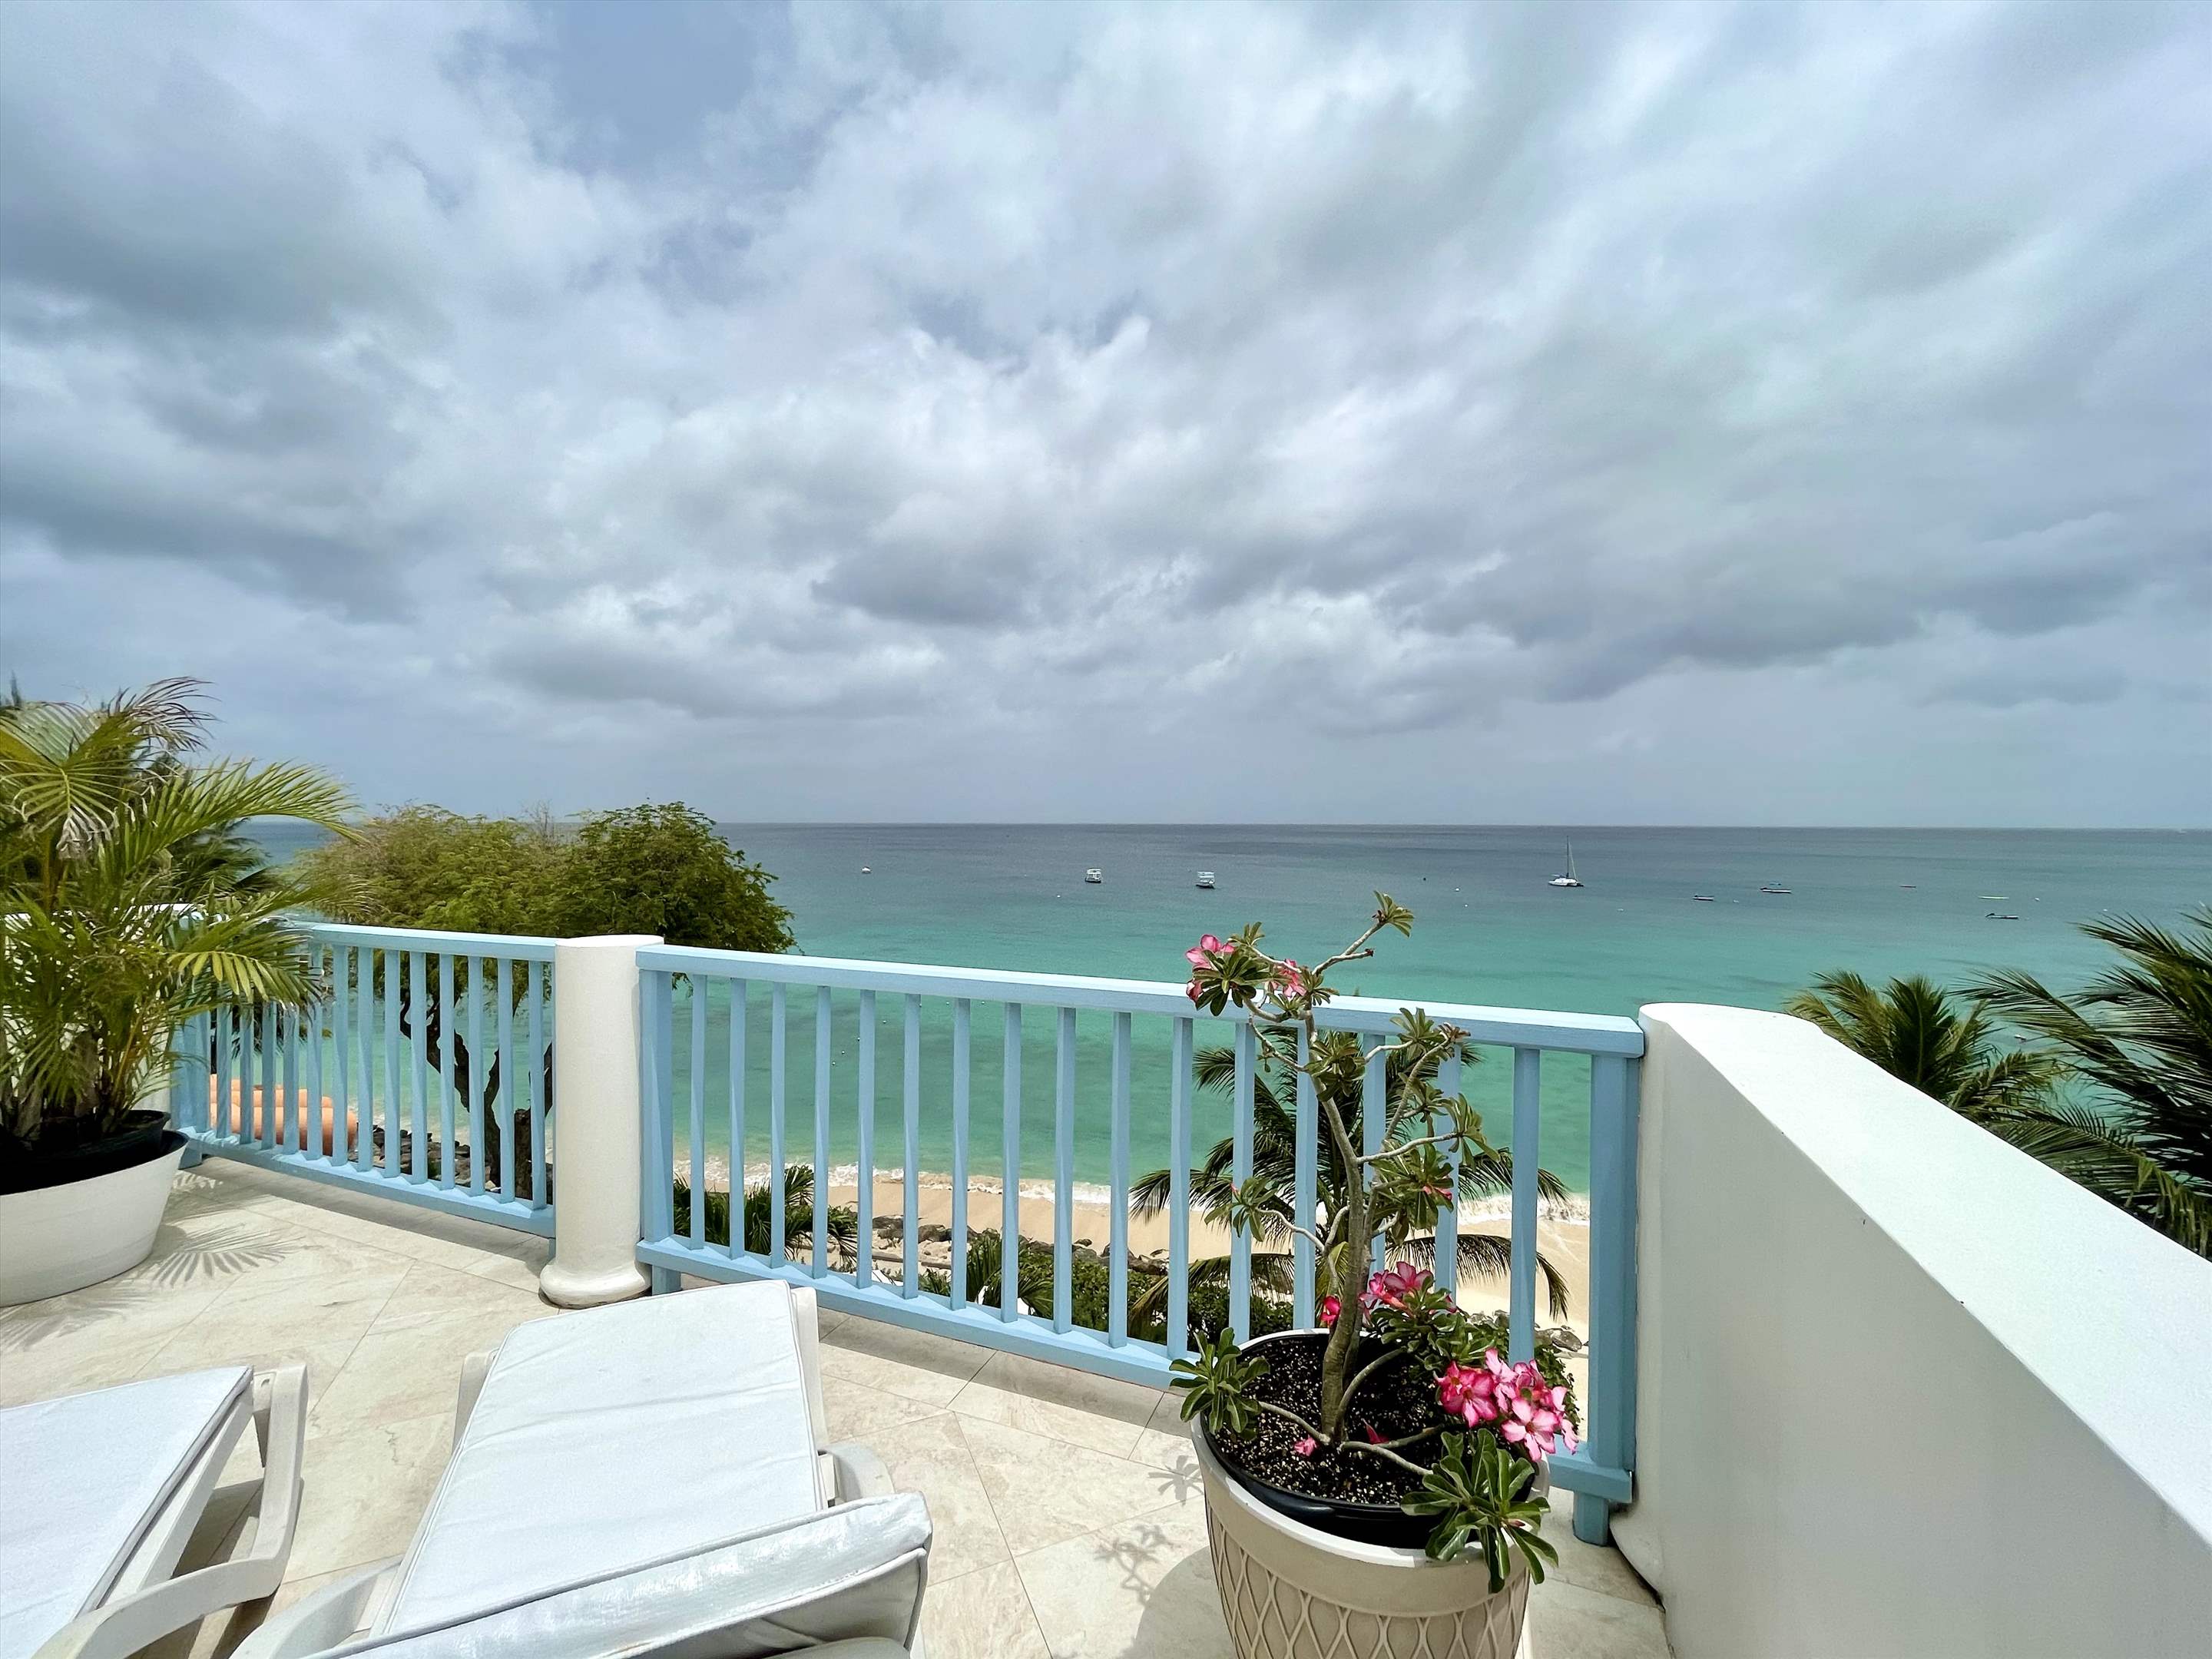 Villas on the Beach 403, 2 bedroom, 2 bedroom apartment in St. James & West Coast, Barbados Photo #18